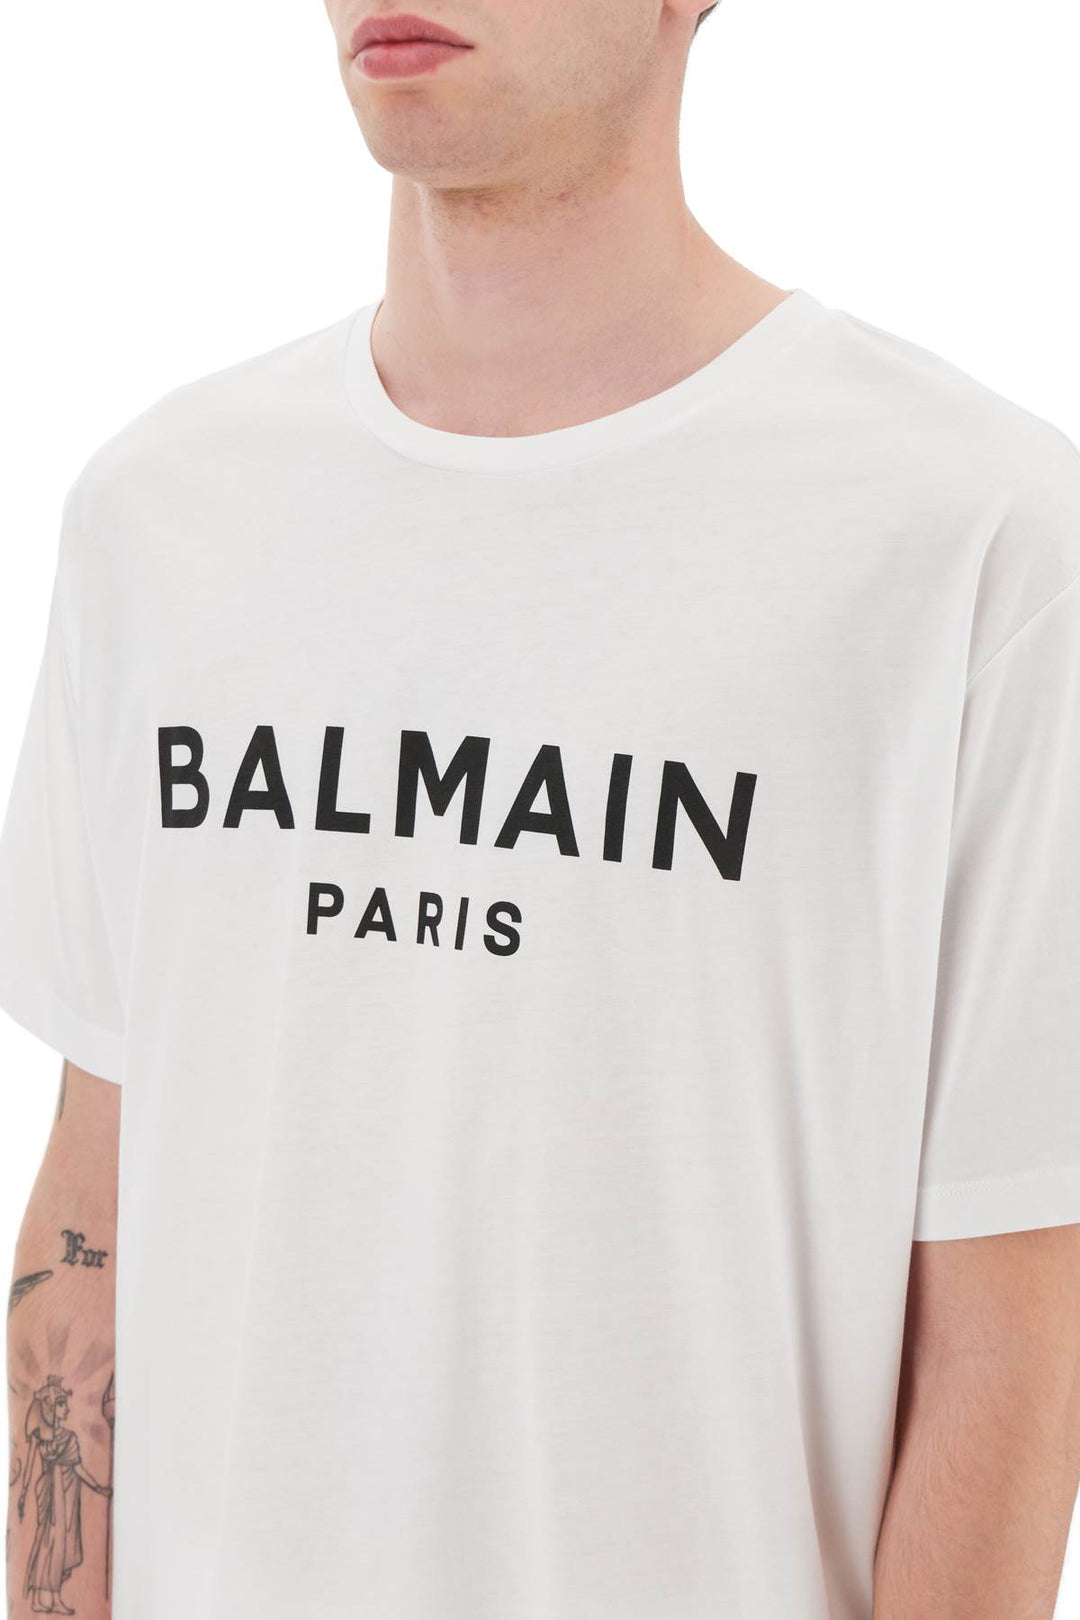 Balmain Logo Print T Shirt   White